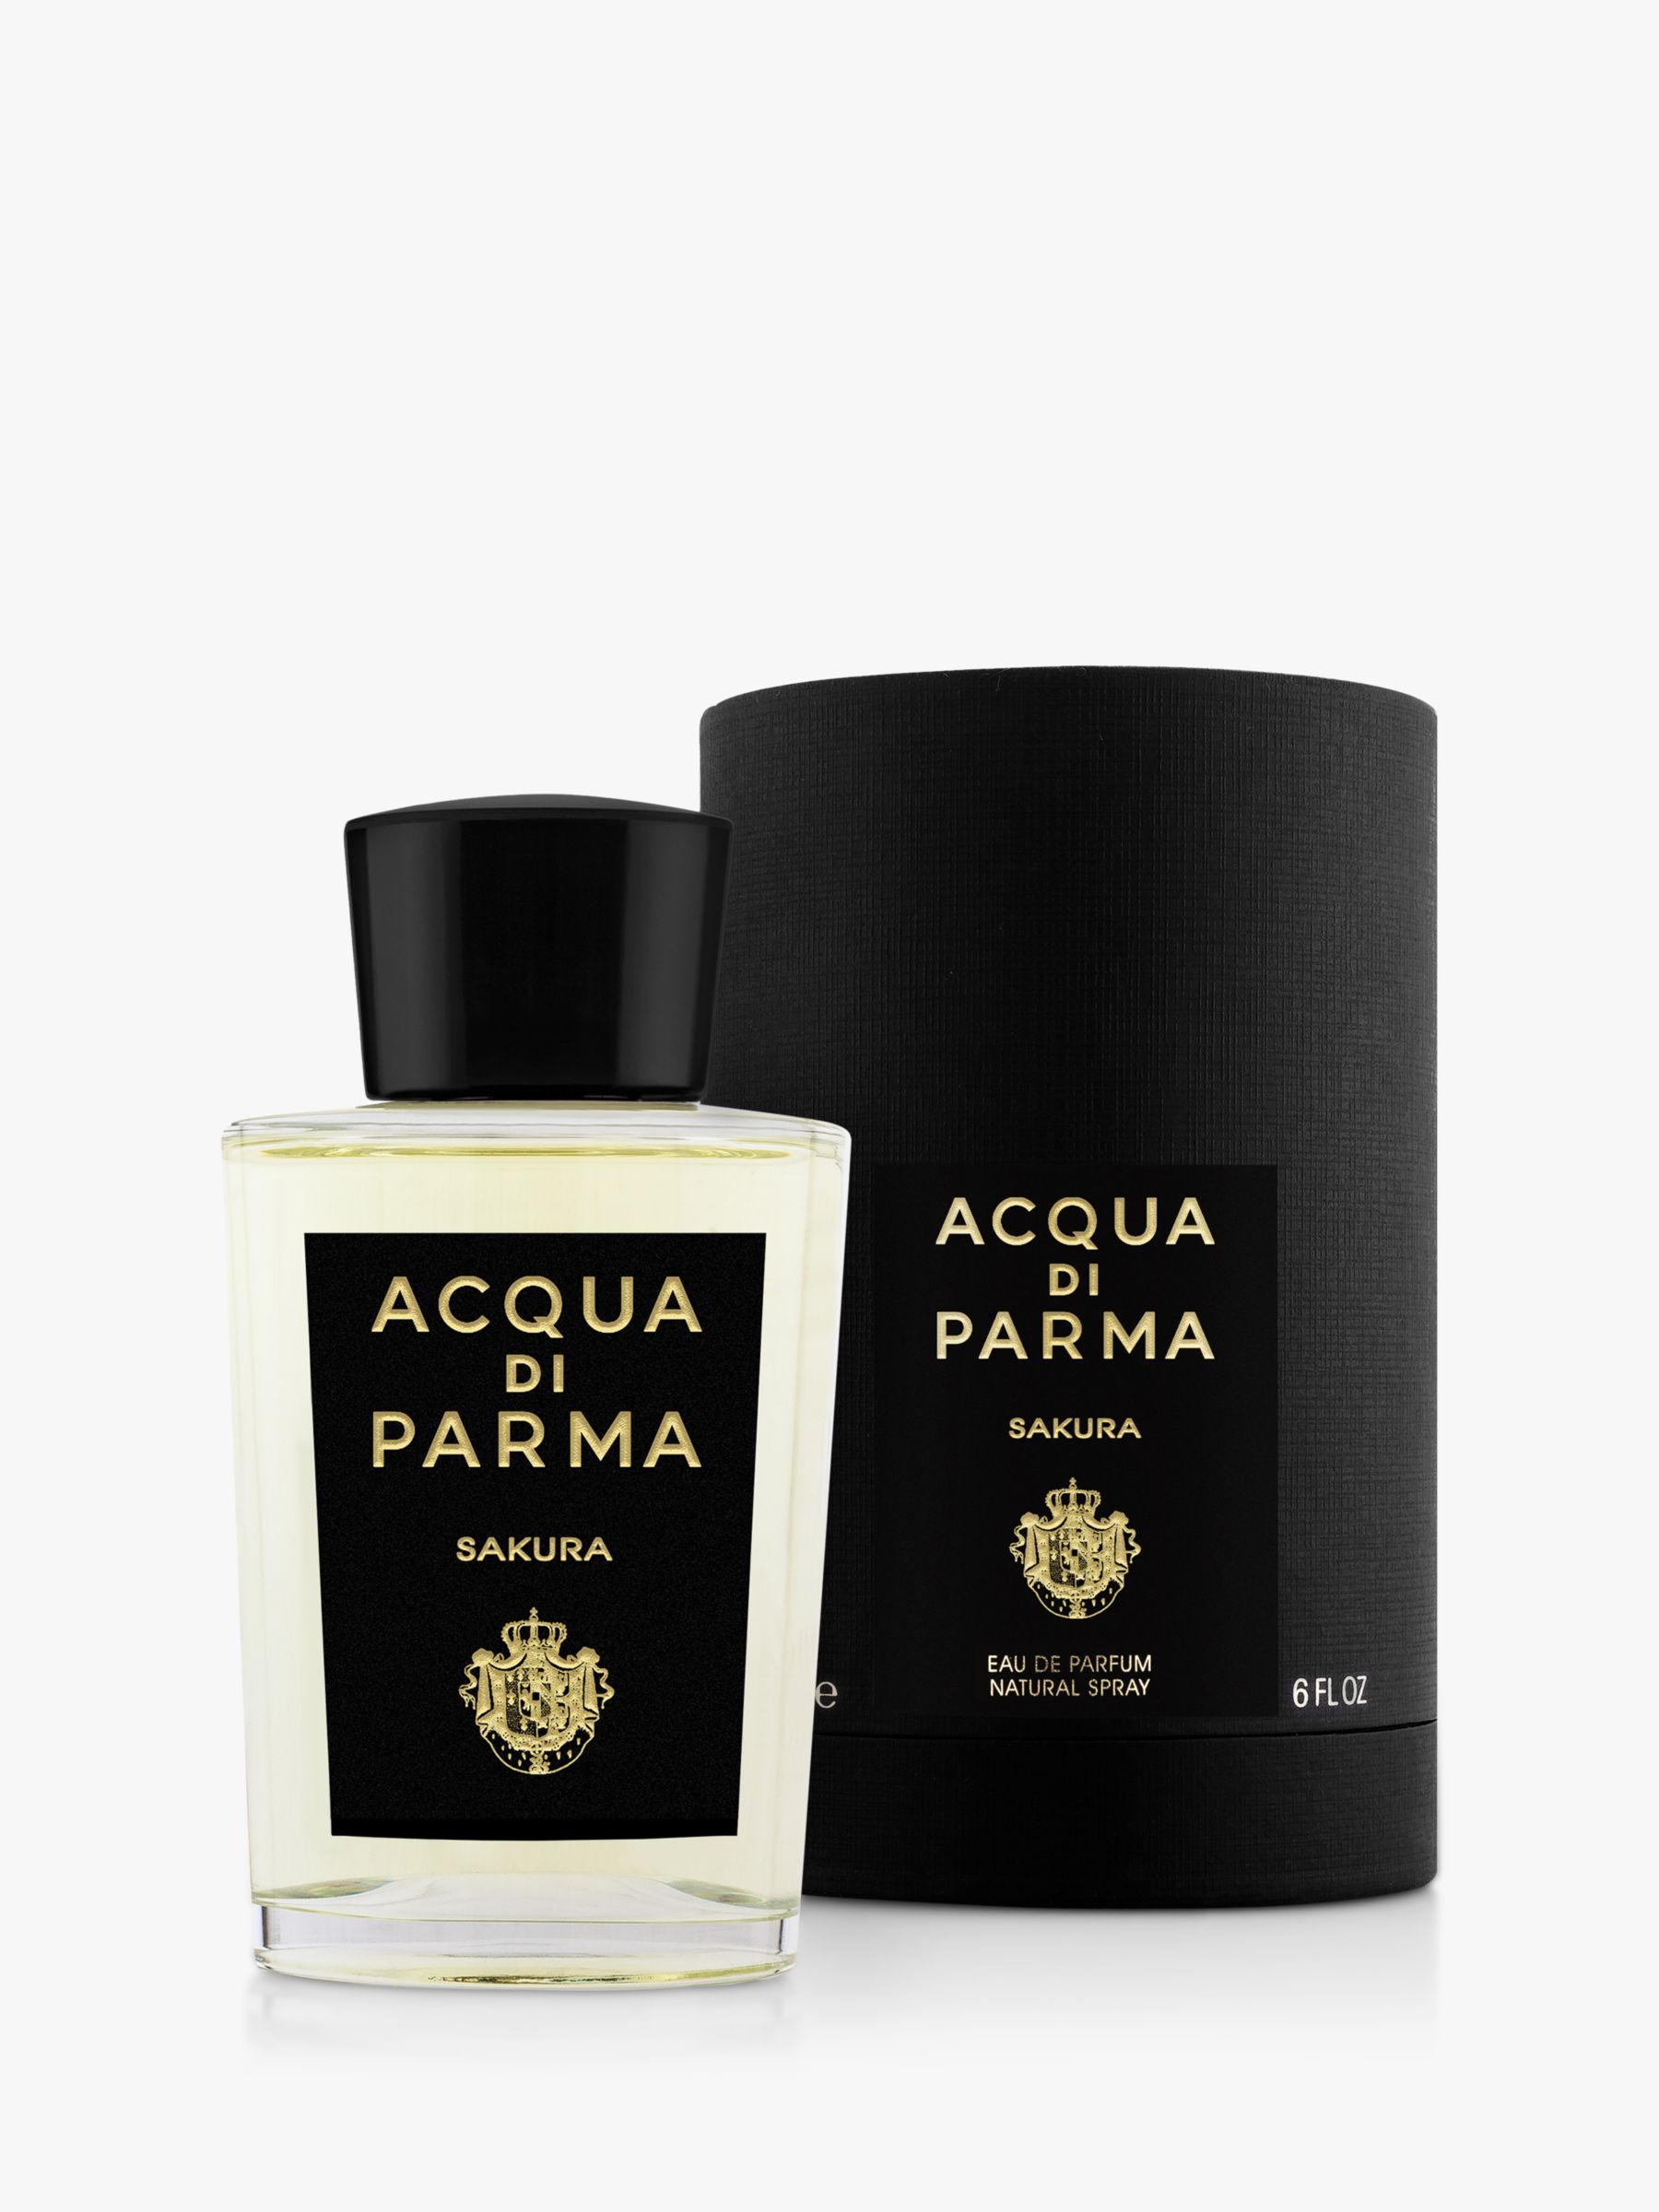 Acqua di Parma Sakura Eau de Parfum, 180ml